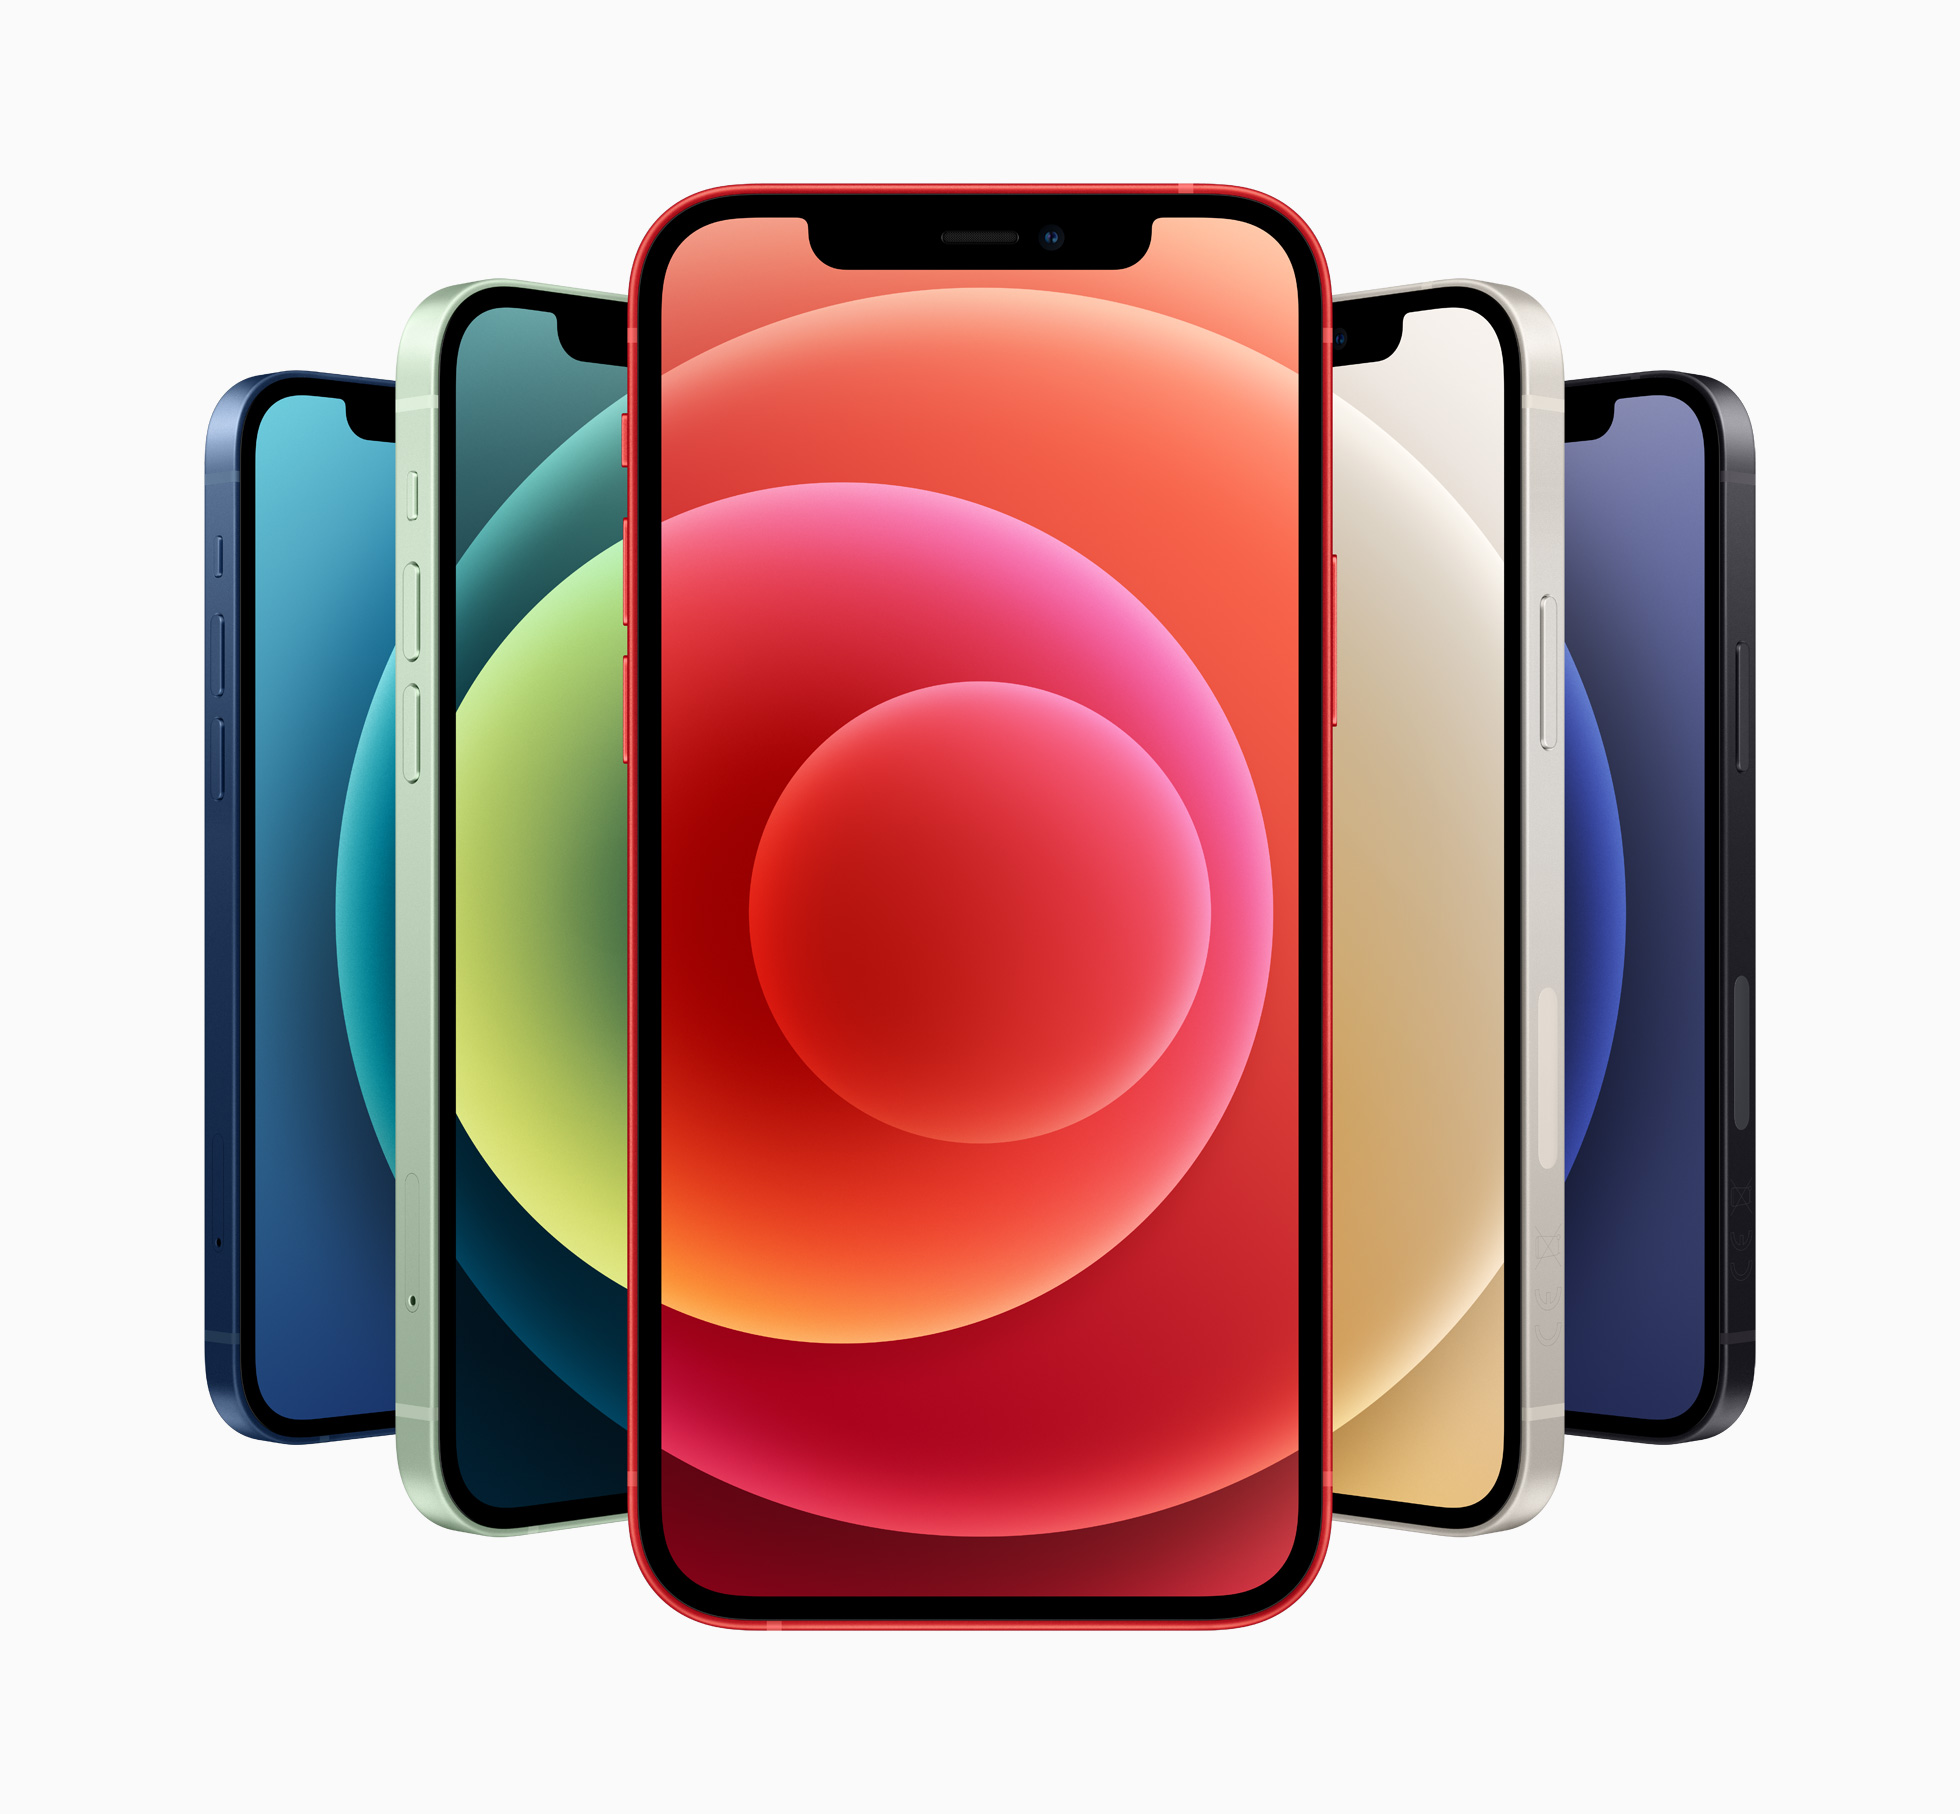 apple_iphone-12_new-design_10132020_big.